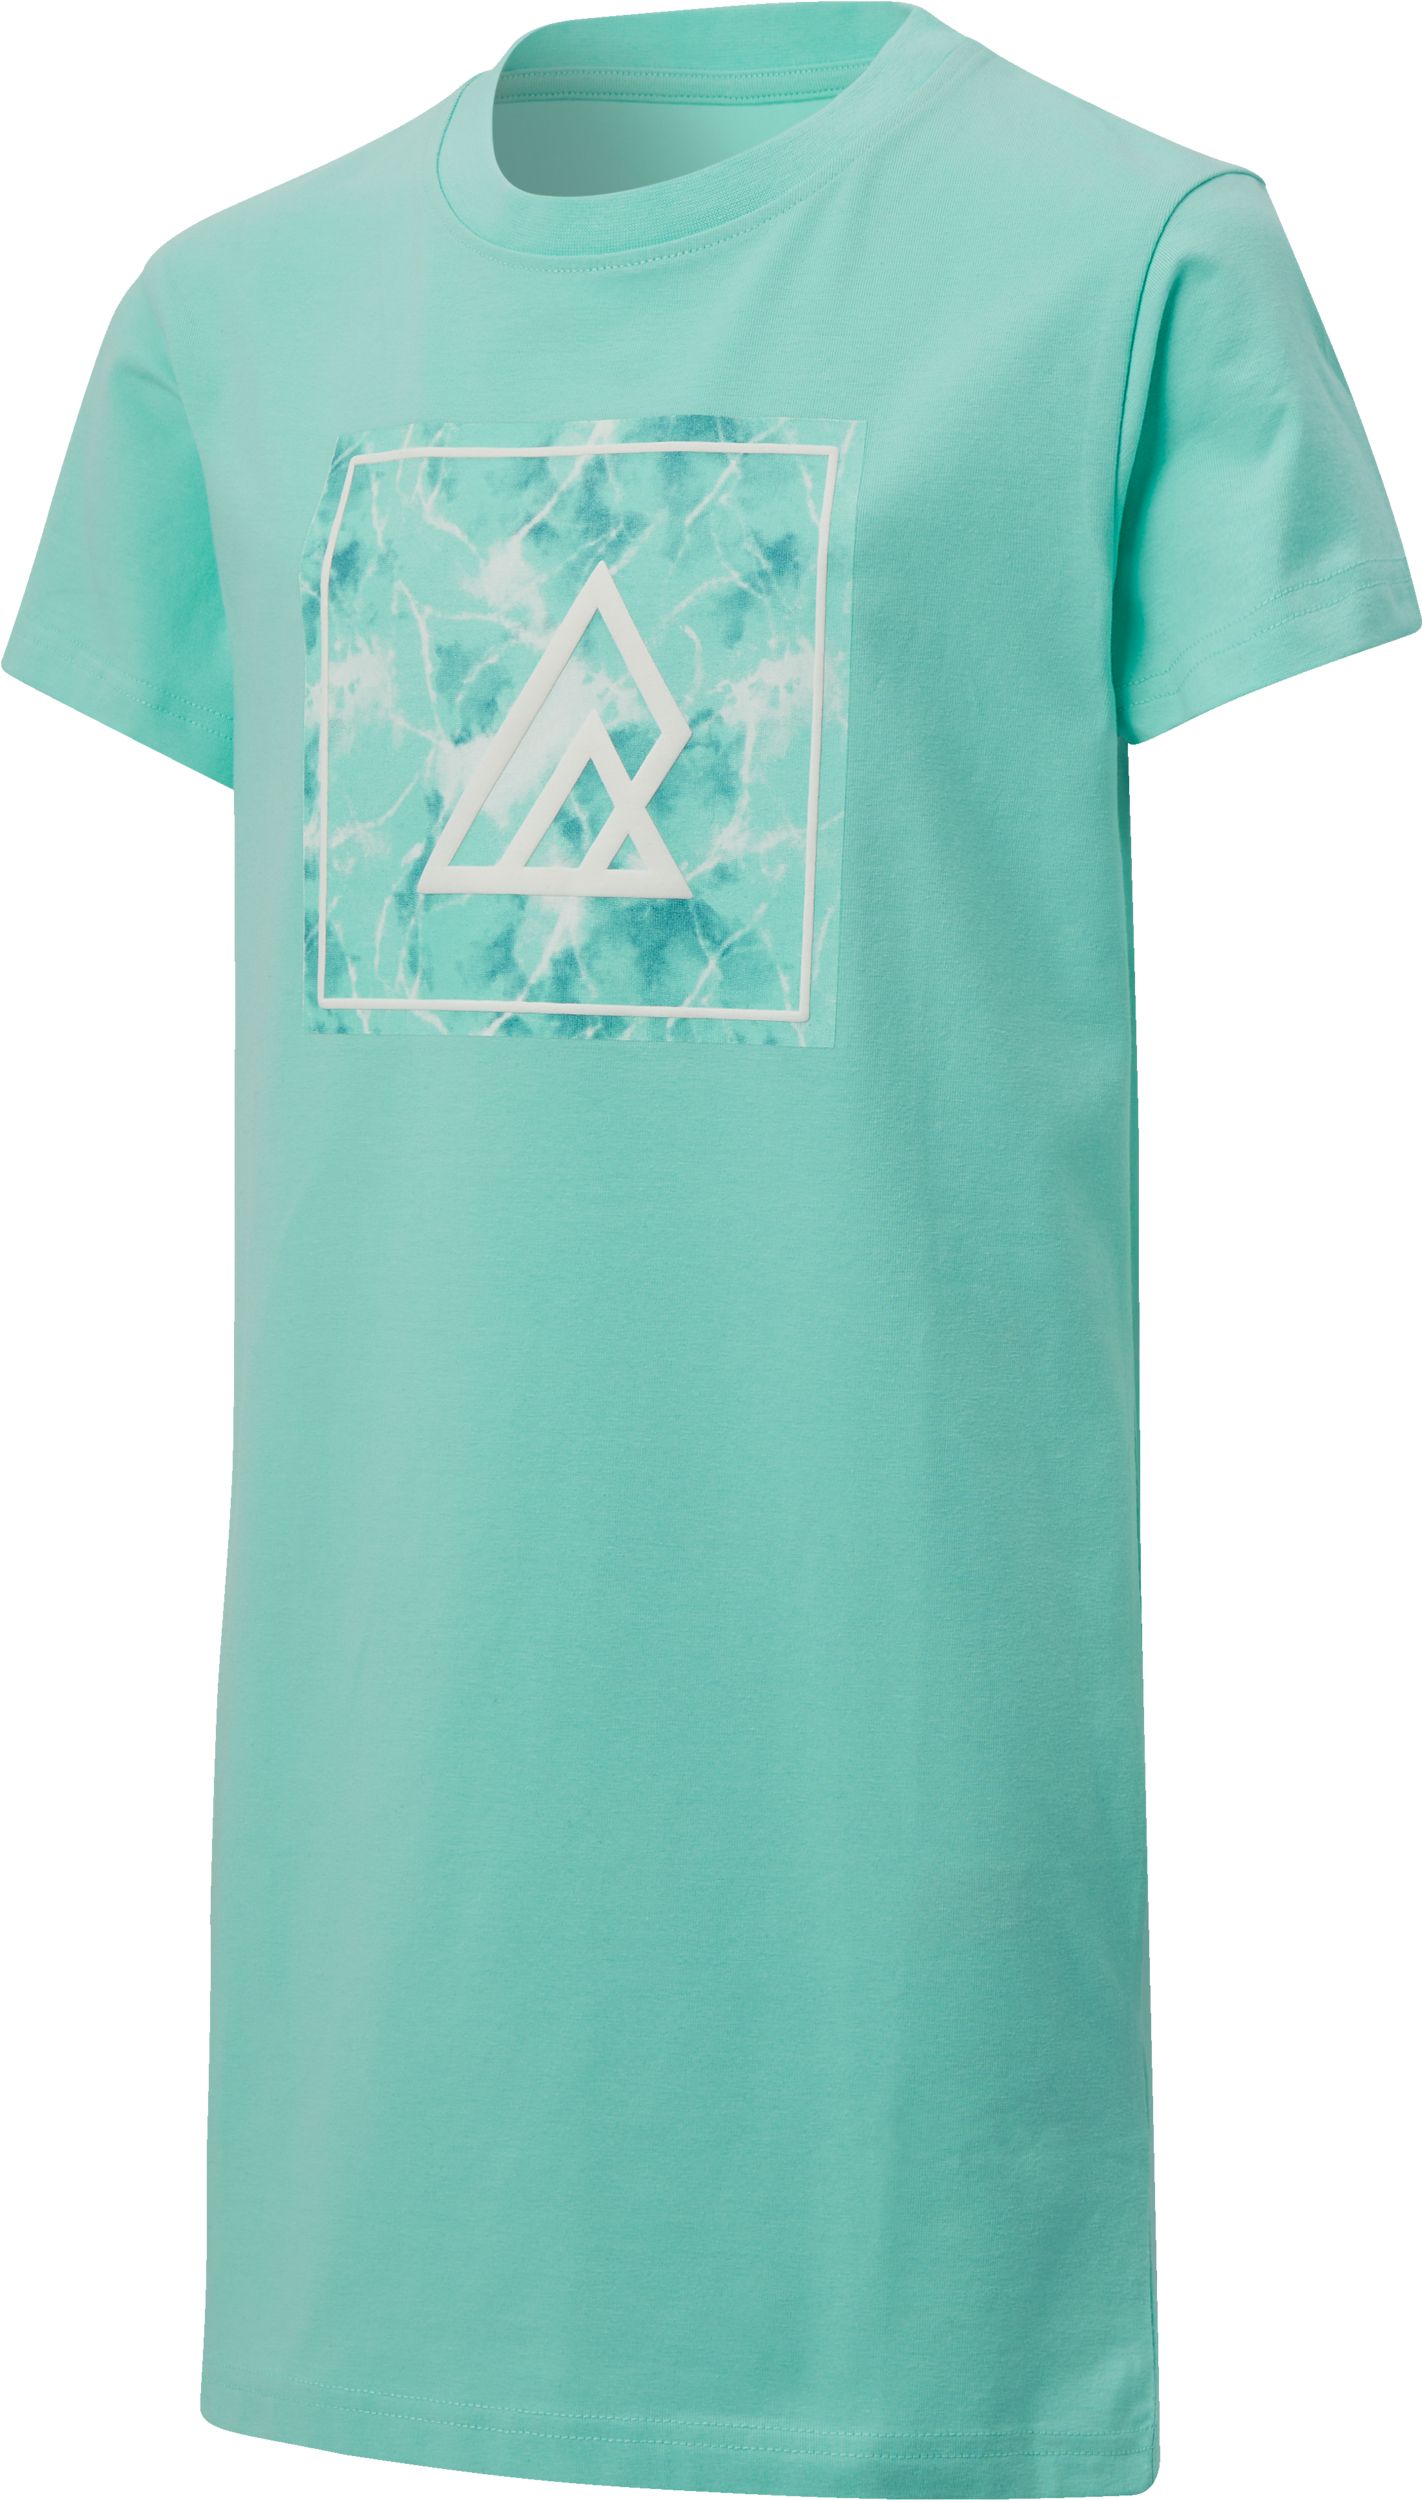 Image of Ripzone Girls' Ramsay Graphic T Shirt Dress